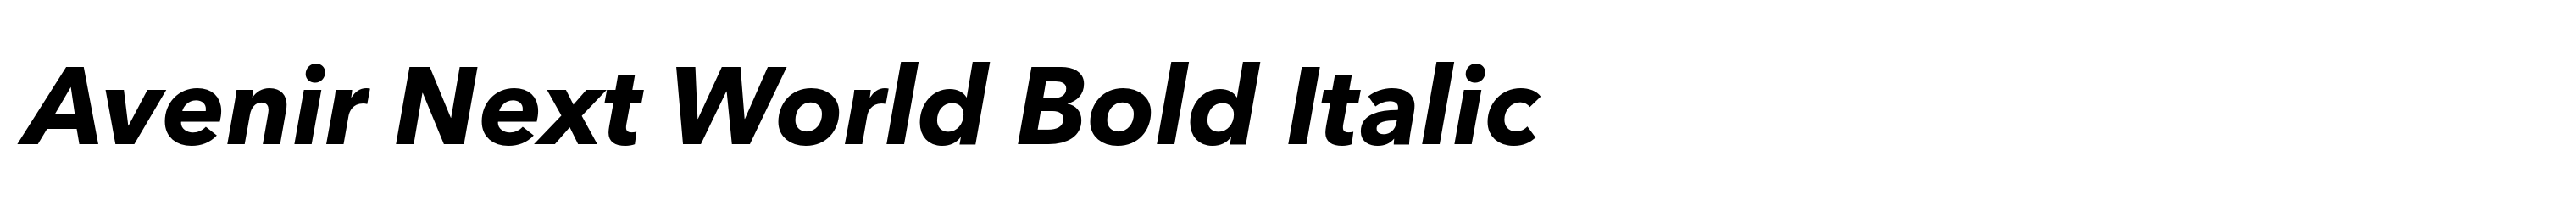 Avenir Next World Bold Italic